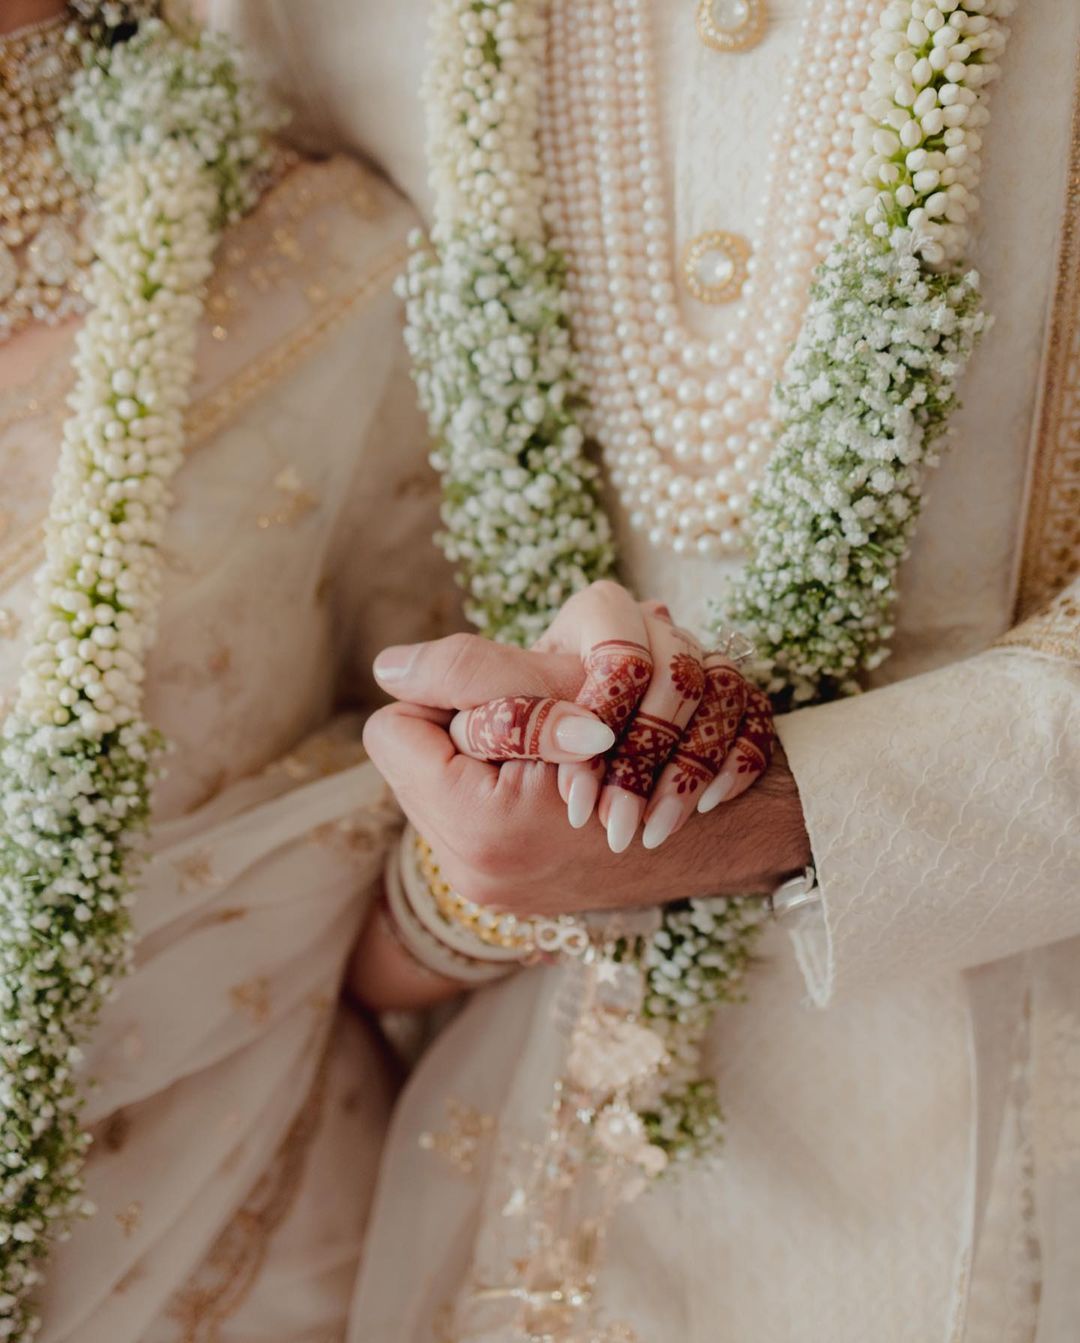 Ranbir Kapoor and Alia Bhatt's Beautiful wedding Photos